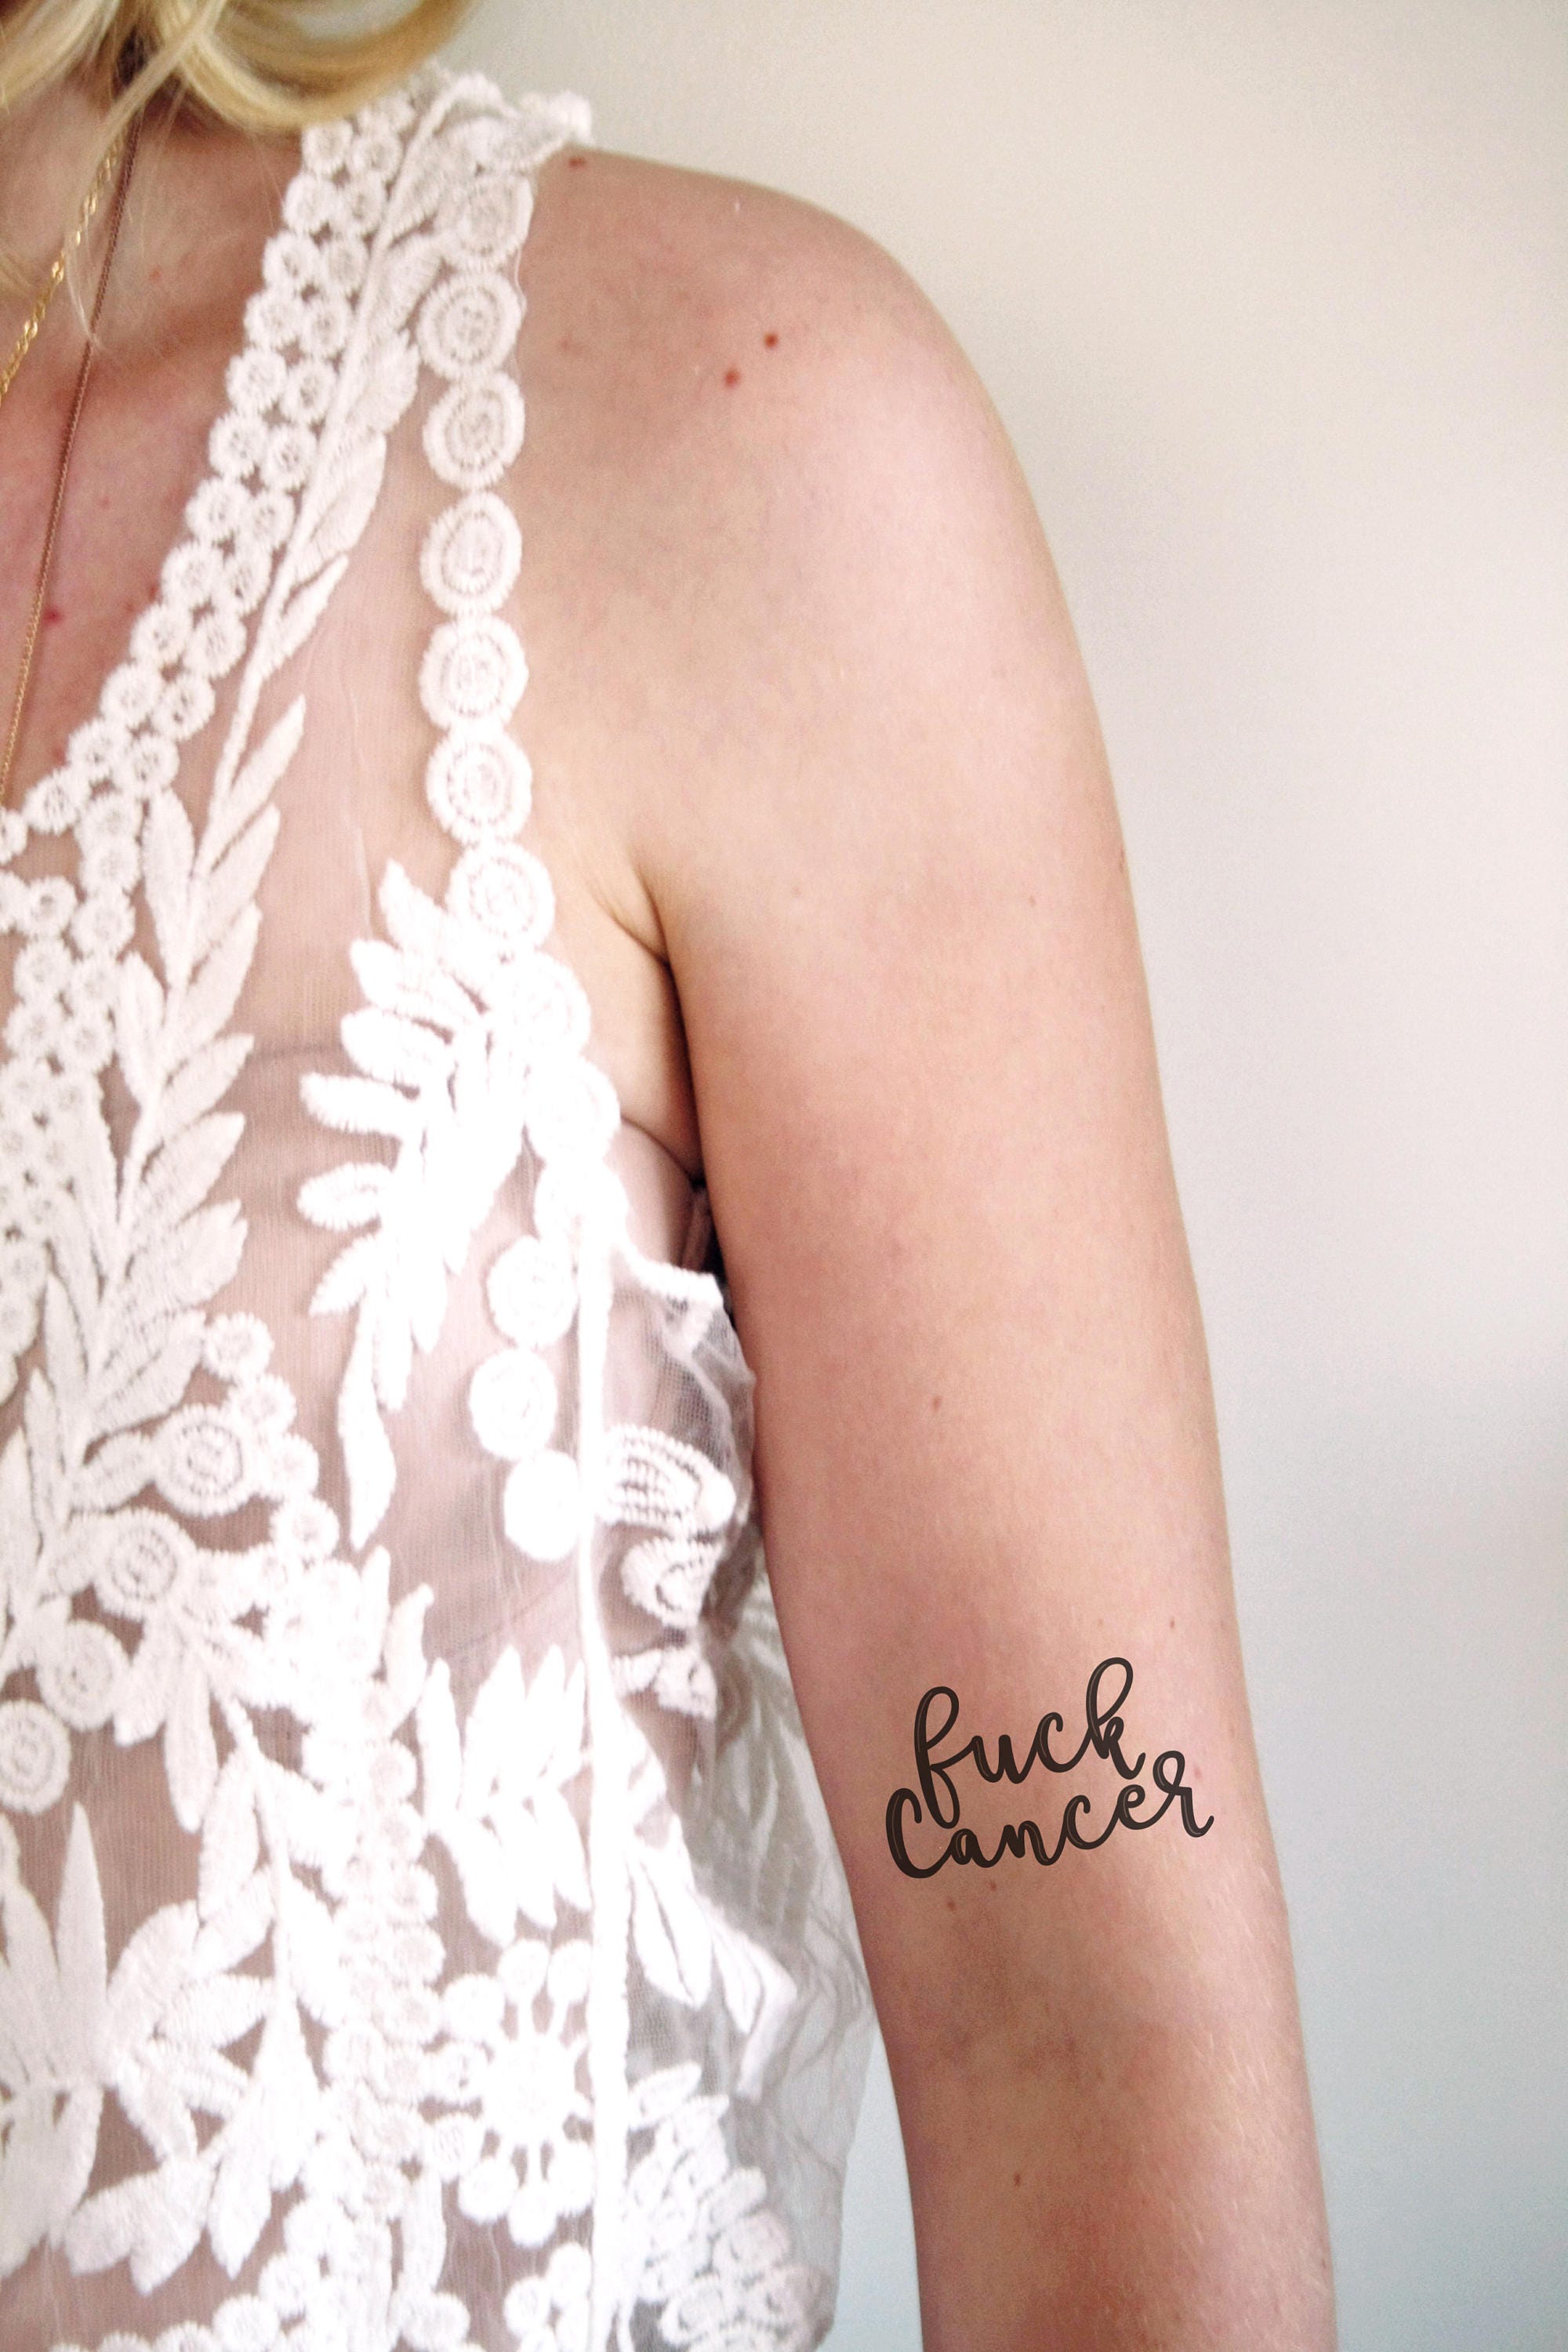 Fck Cancer Temporary Tattoo / Word Tattoo / Small Temporary pic photo image